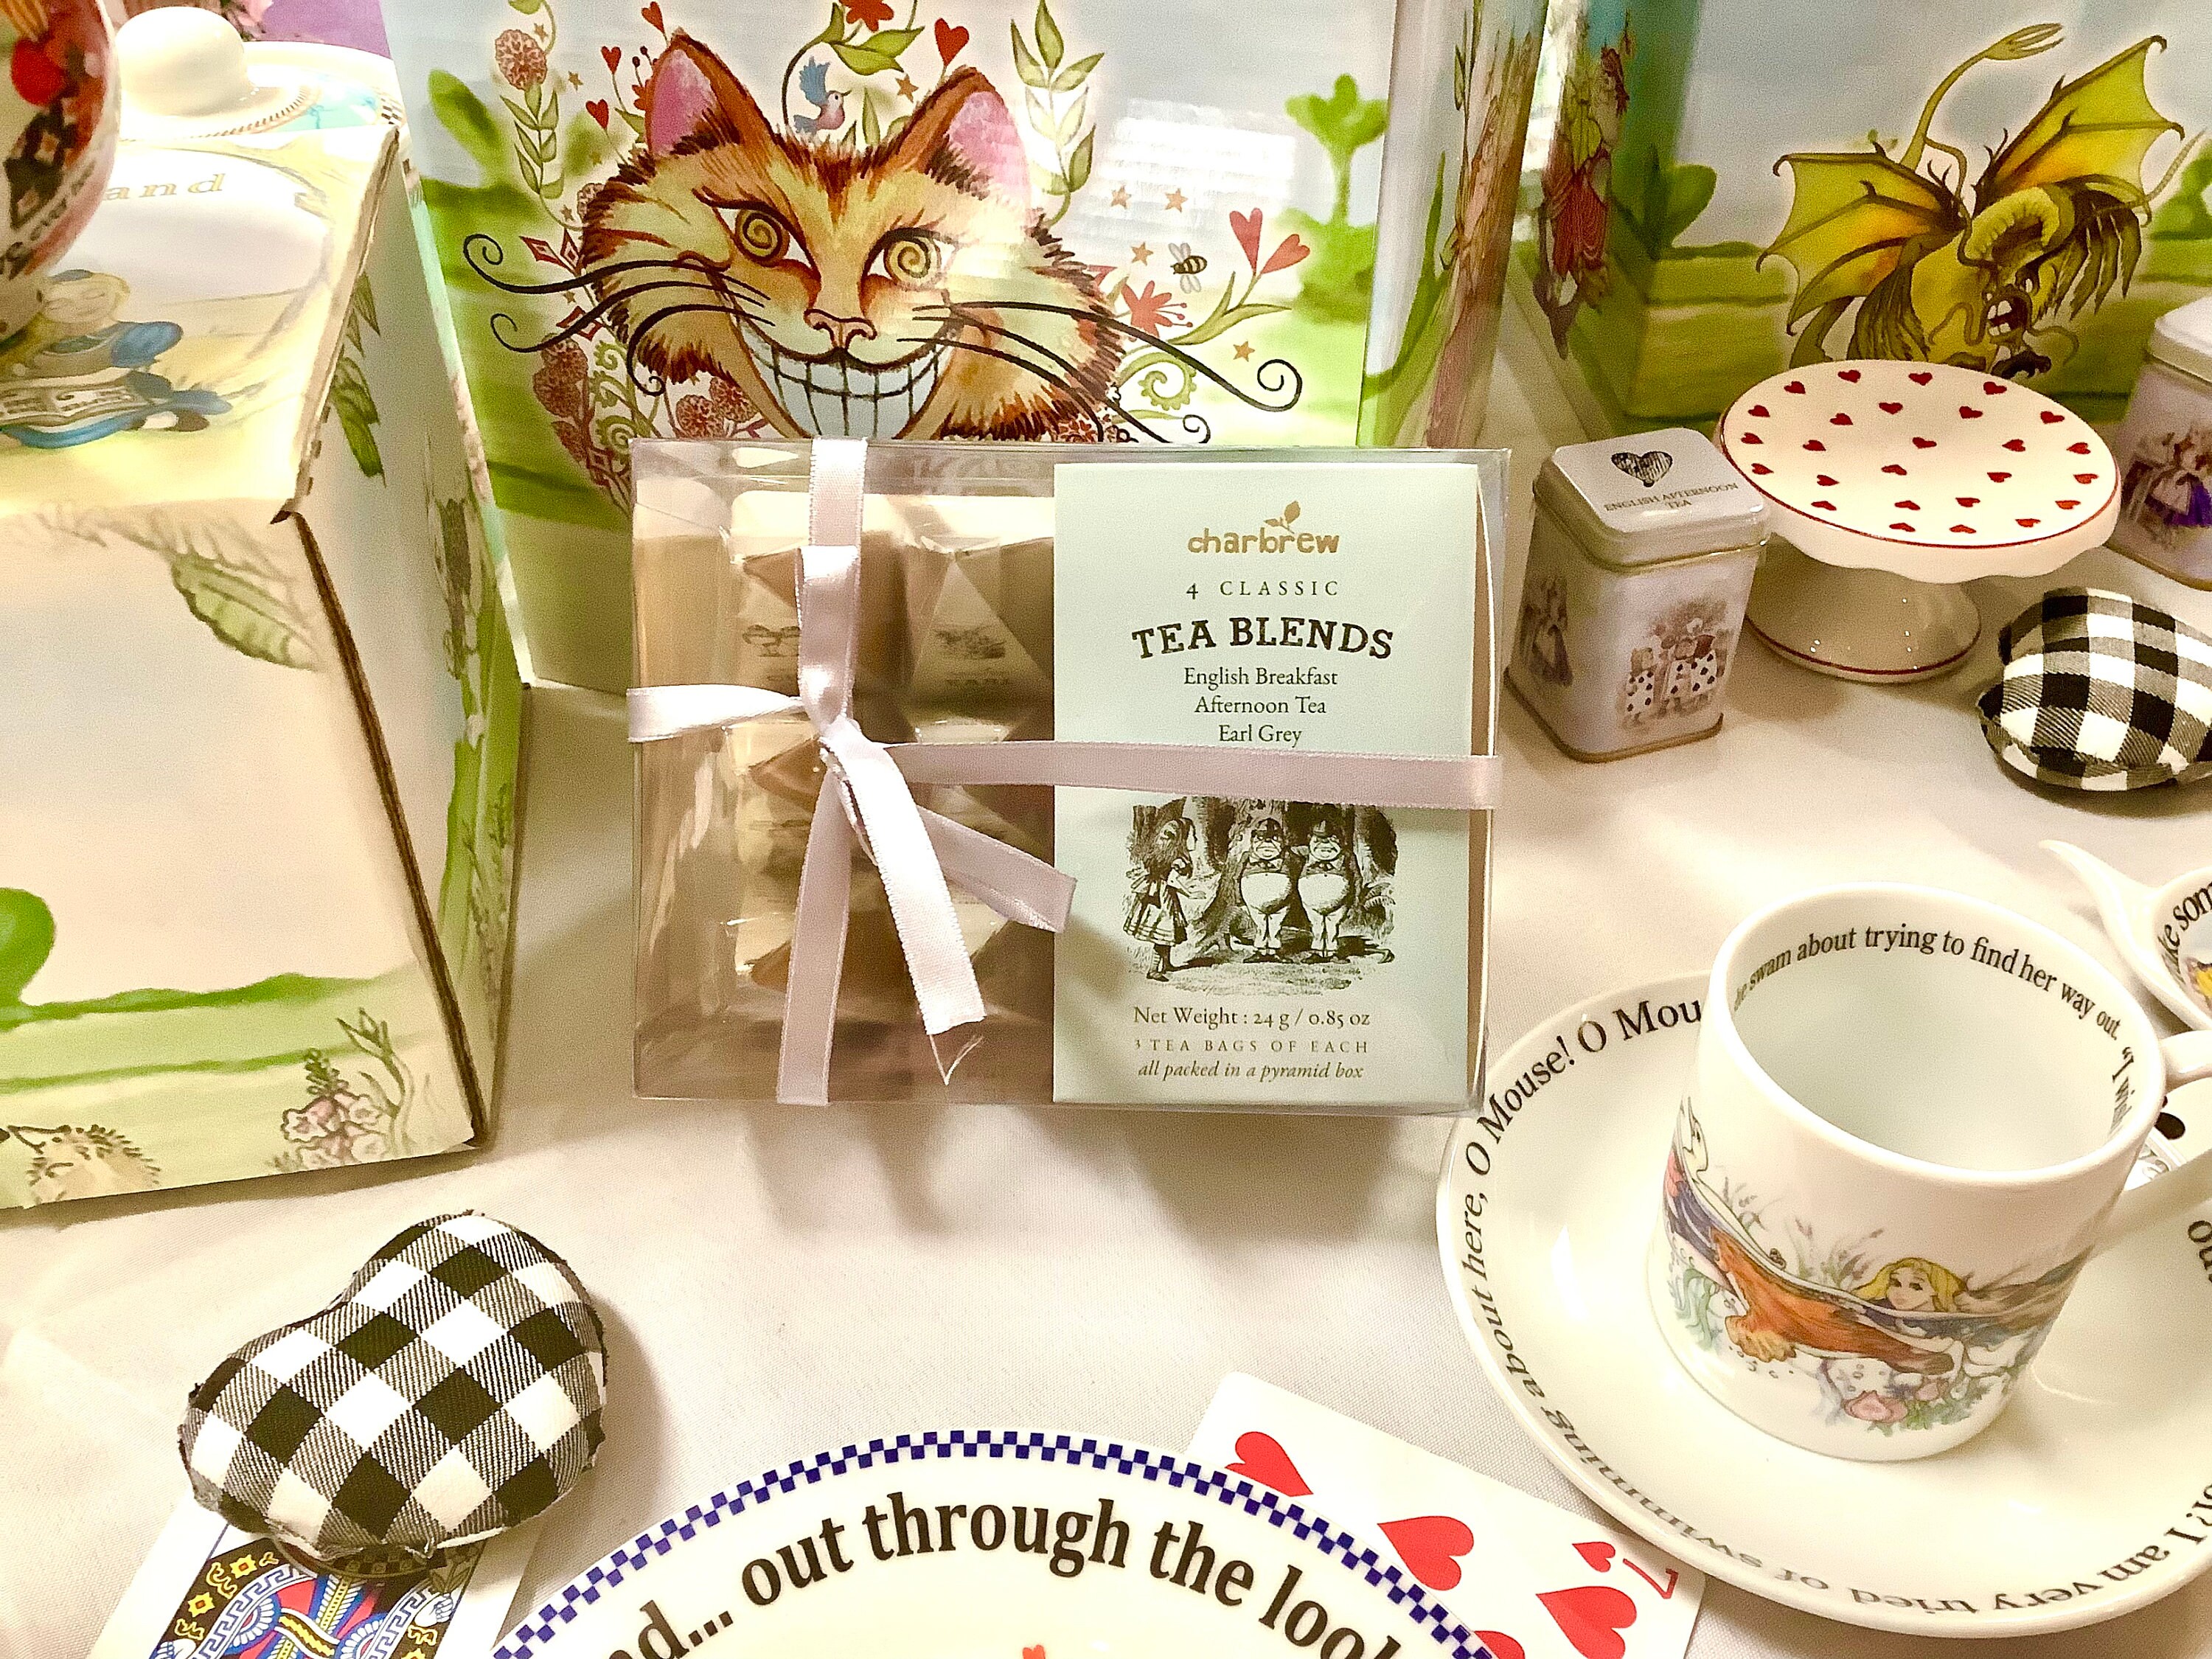 Classic Alice in Wonderland Gift Idea, Birthday Gift Basket for